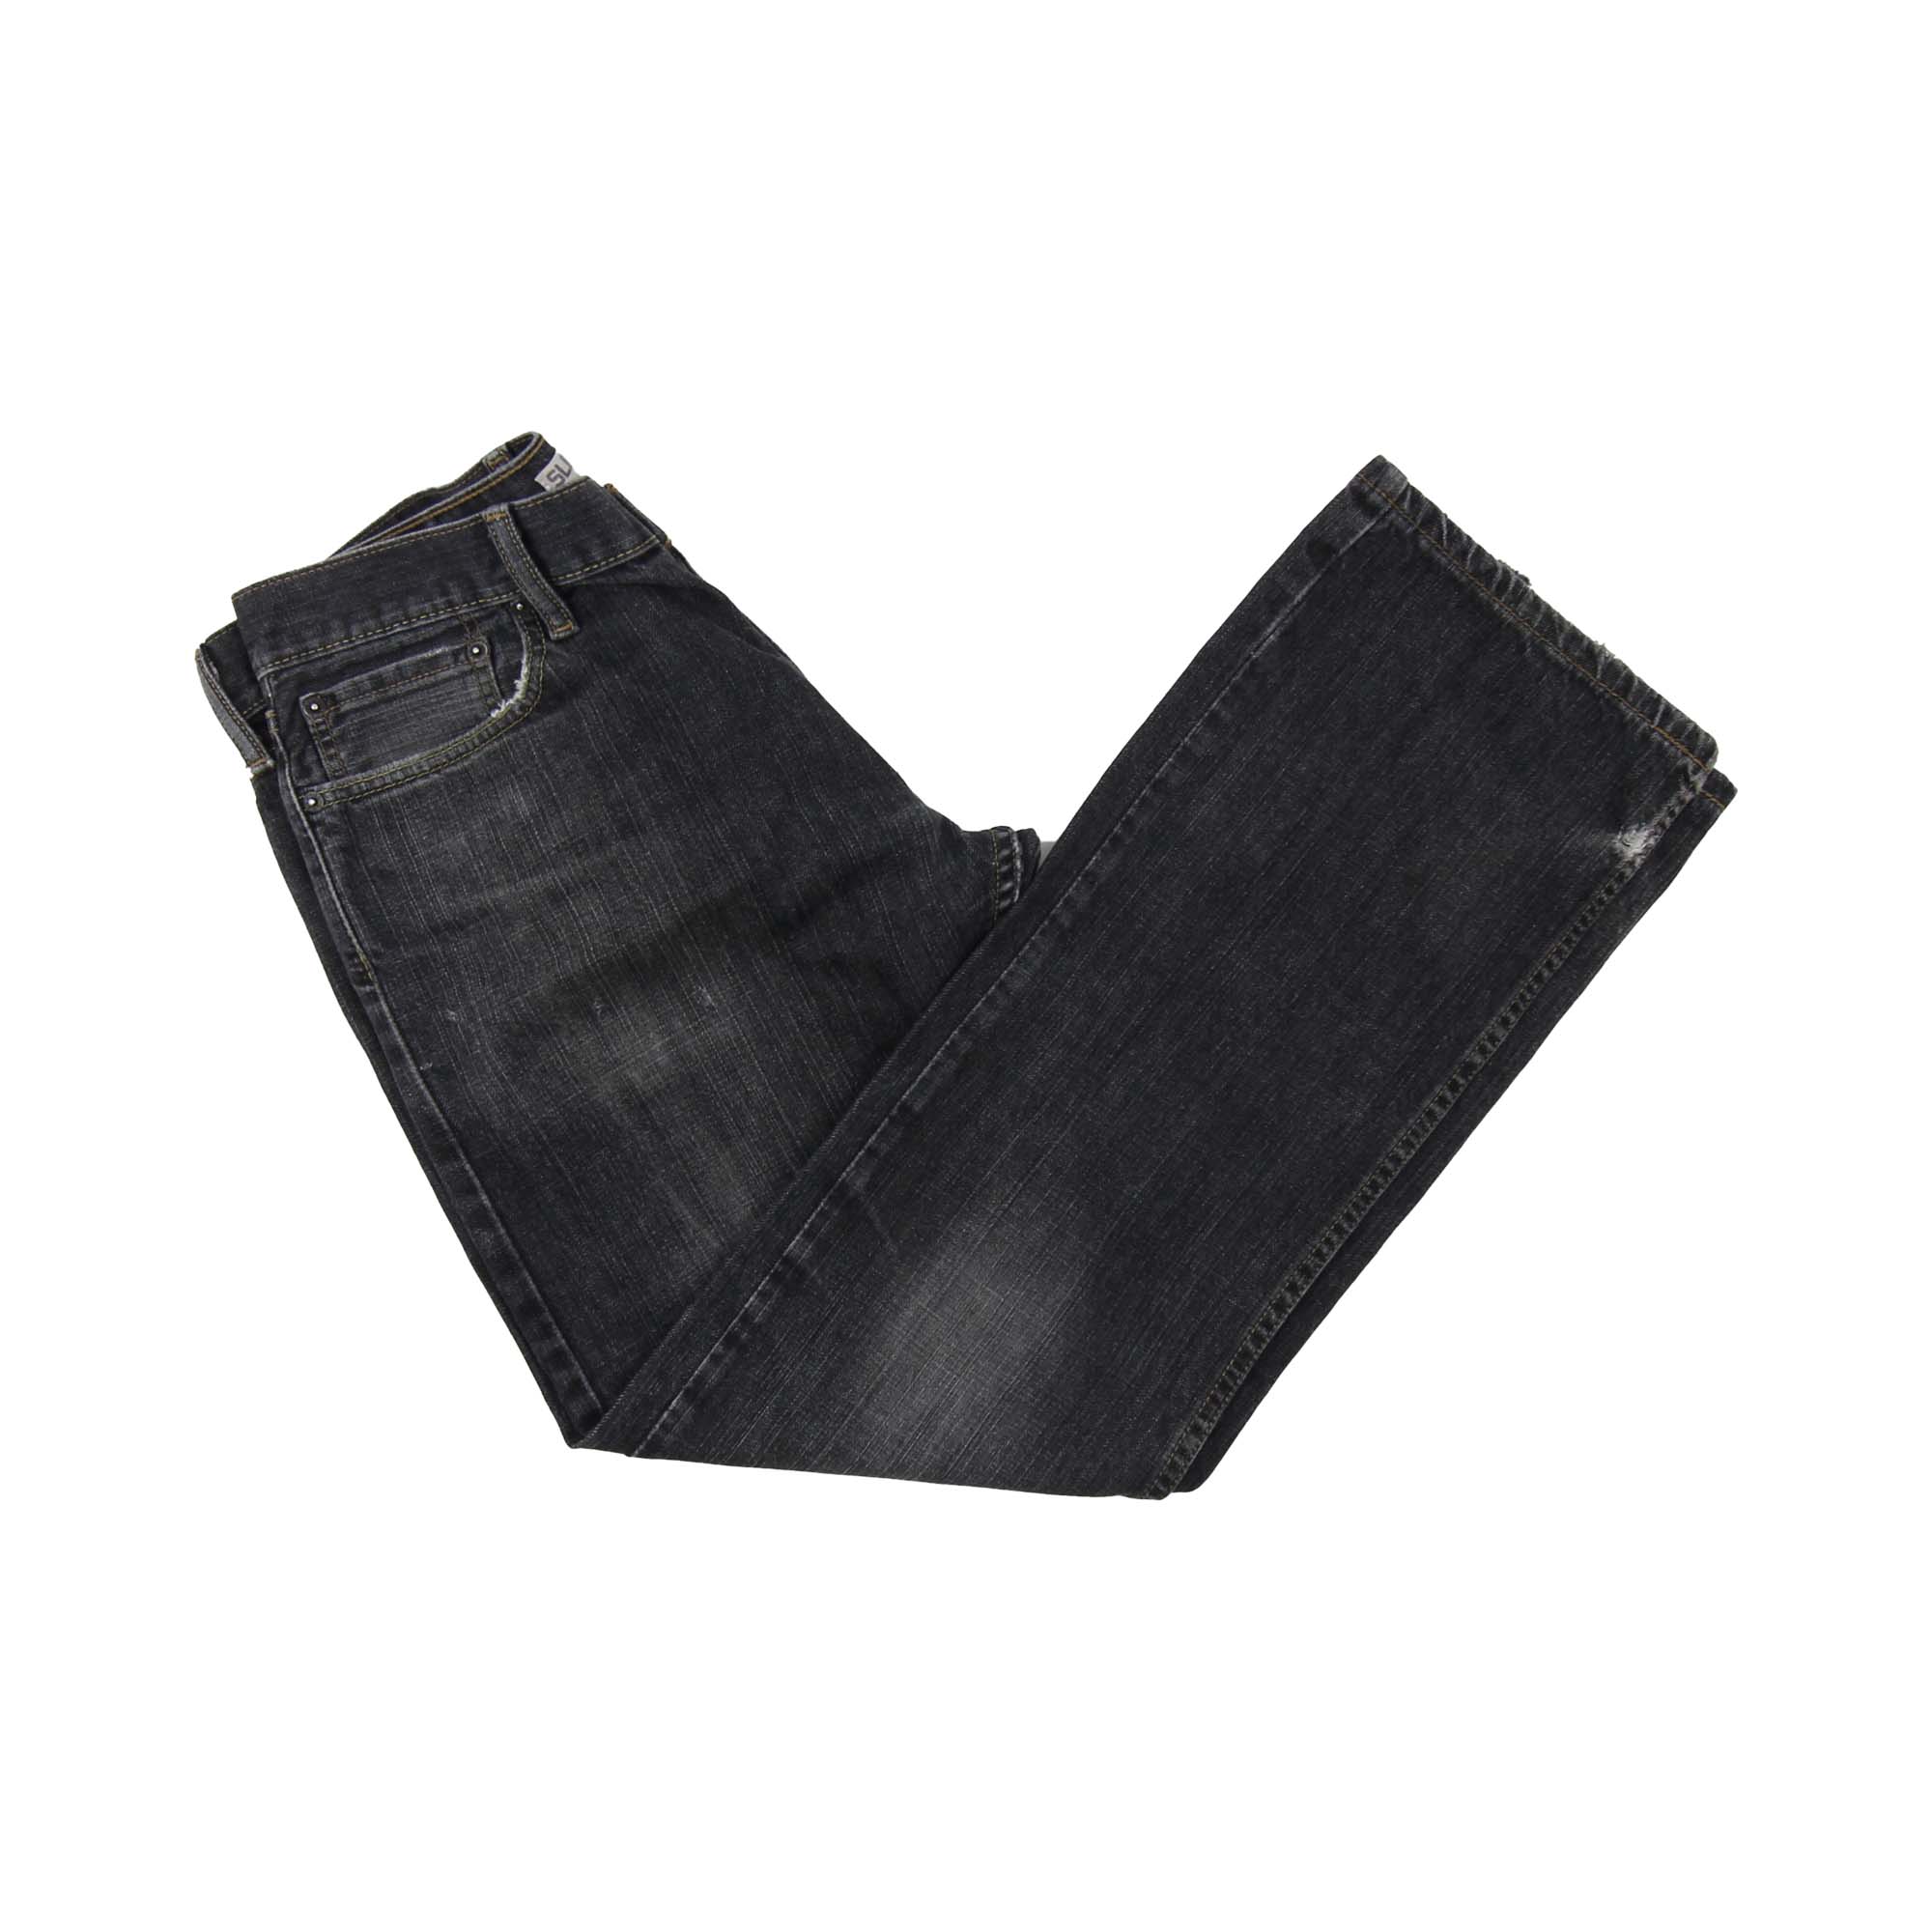 Levi's 514 Slim Straight Jeans  -   W34 L30